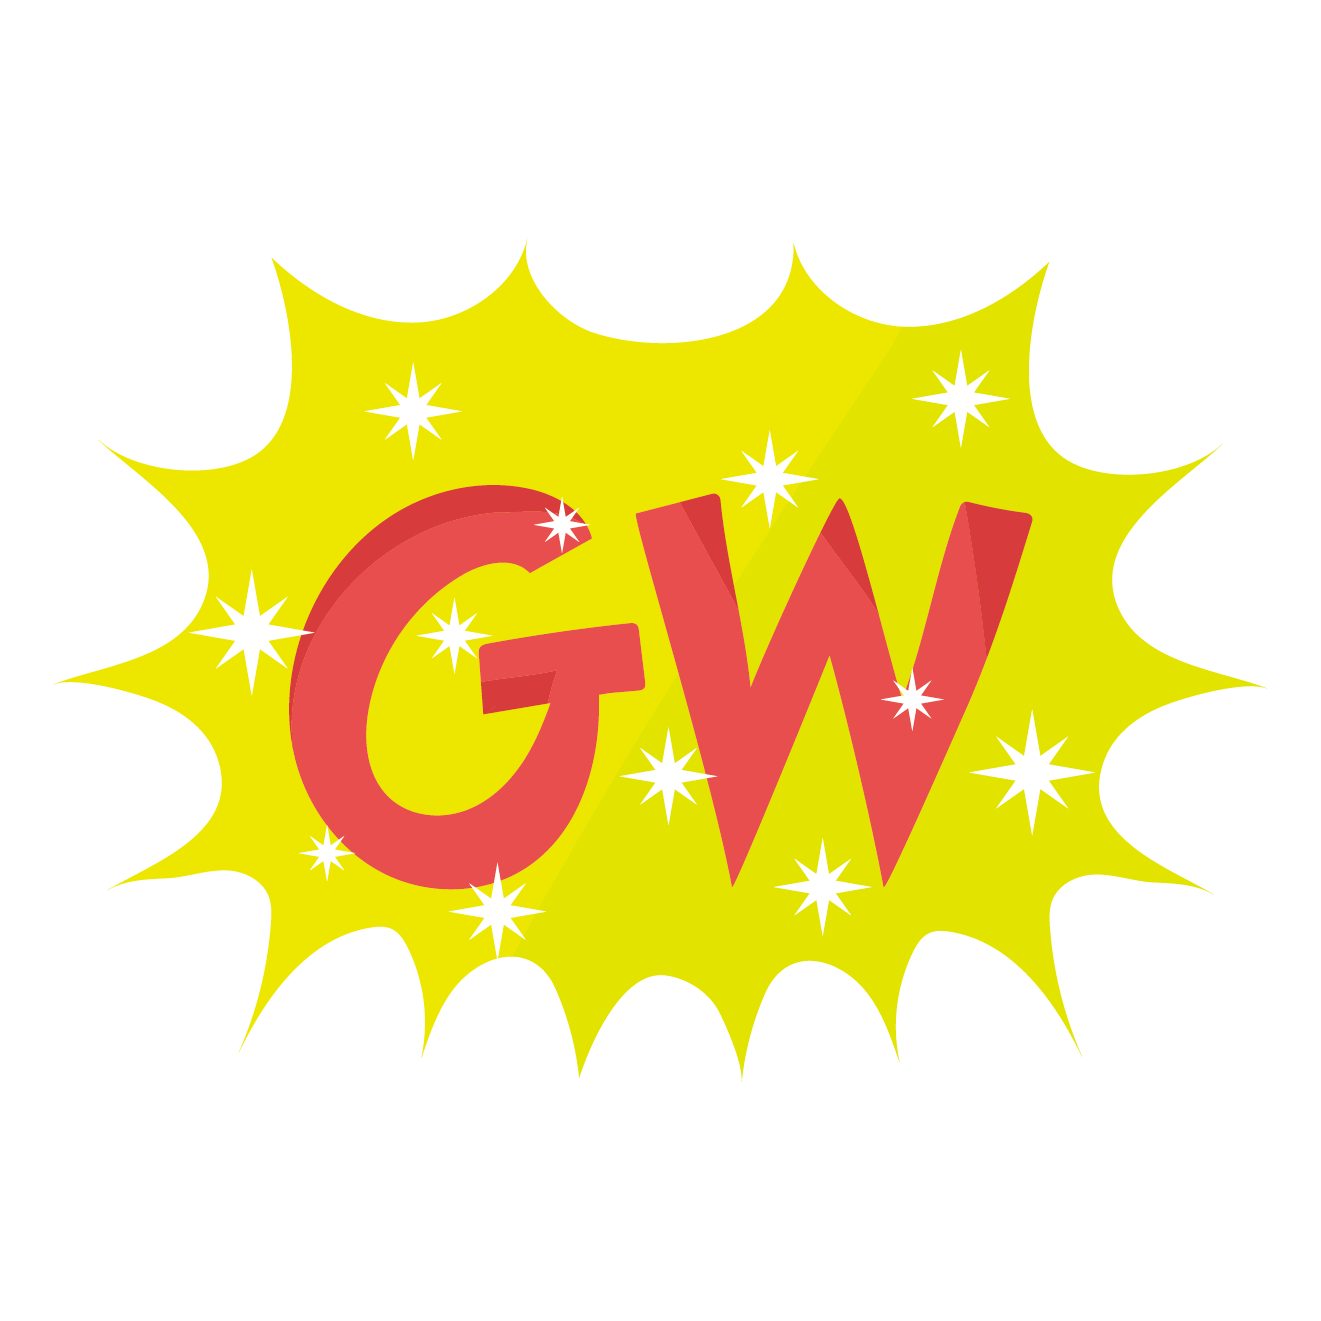 Gw ゴールデンウィークの文字 ロゴ マーク イラスト 商用フリー